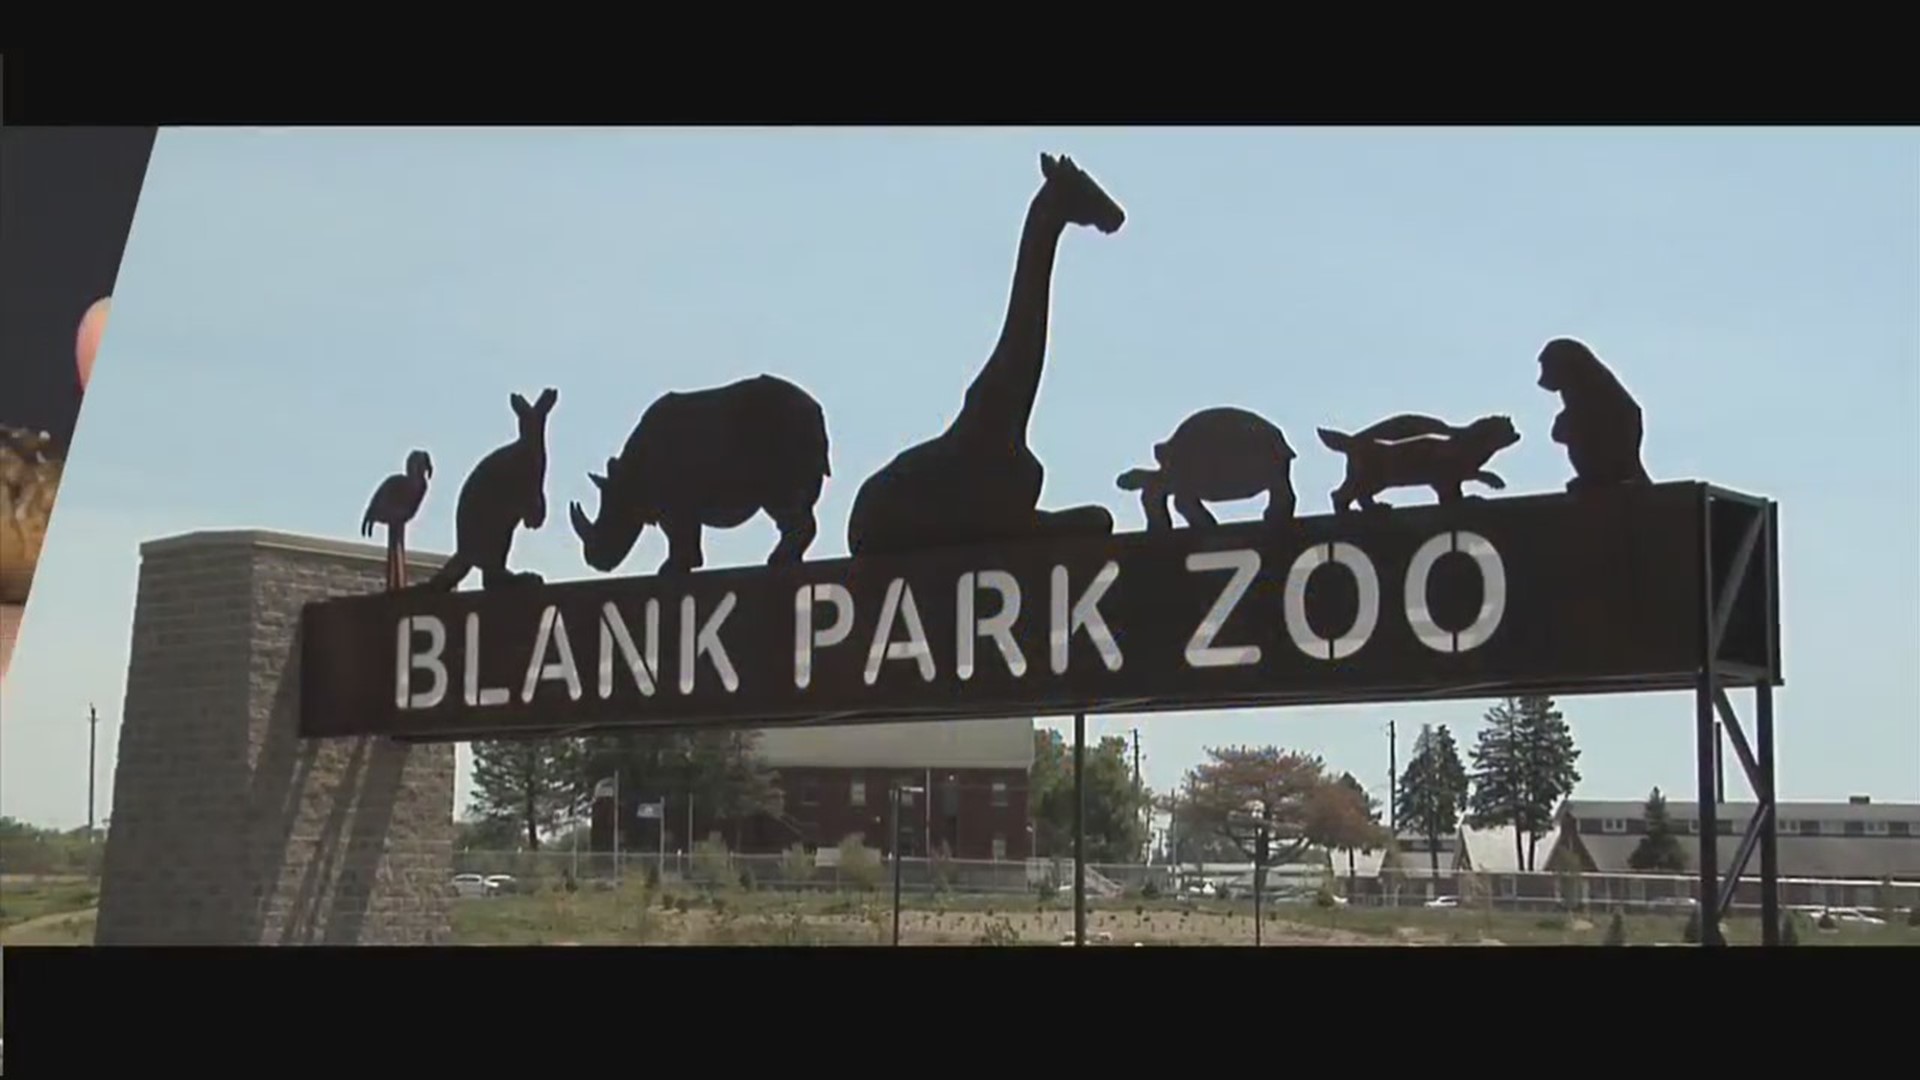 Blank Park Zoo - Community Service Project